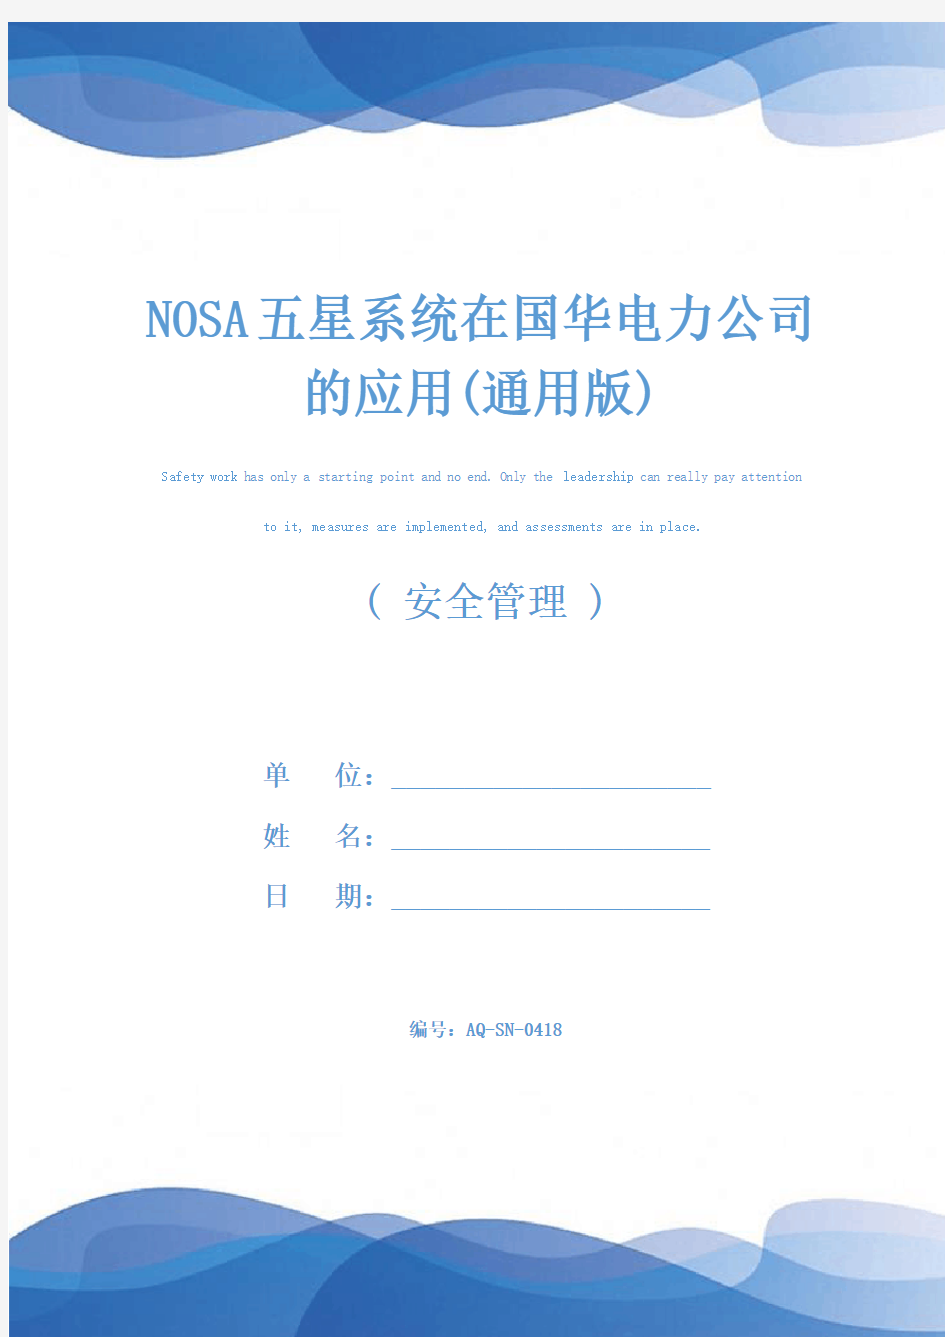 NOSA五星系统在国华电力公司的应用(通用版)